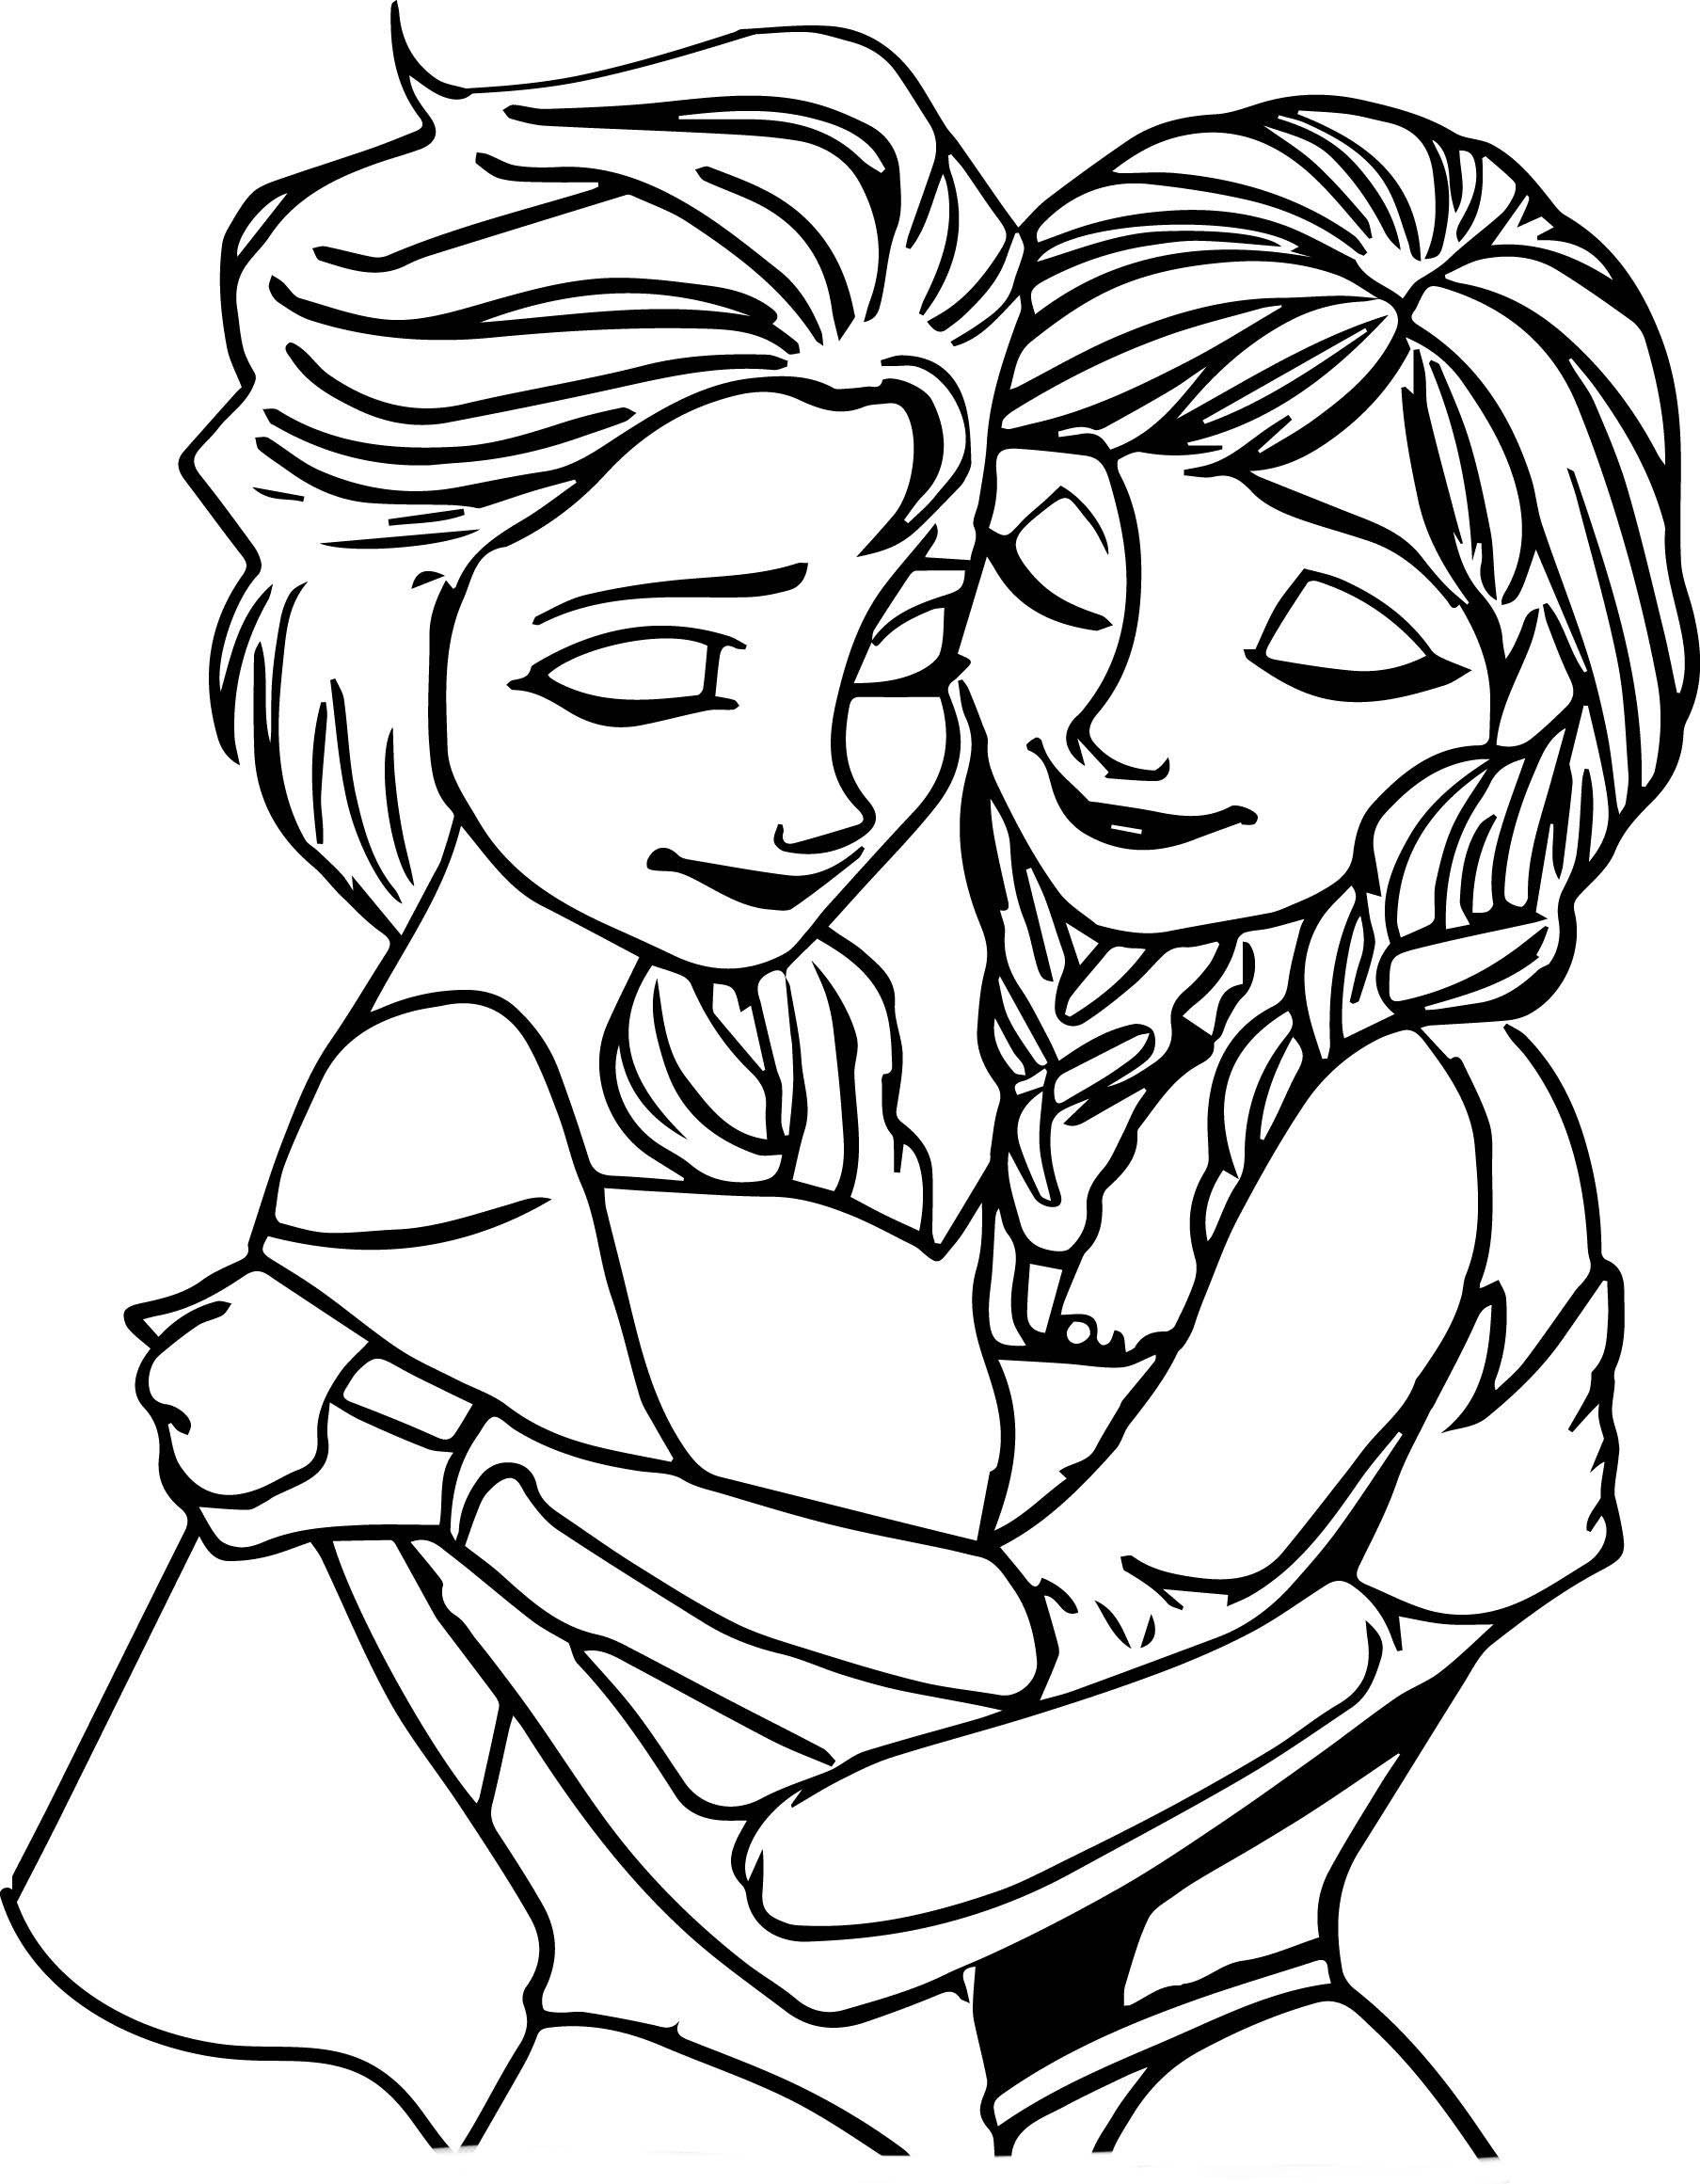 Best ideas about Coloring Pages For Girls Elsa And Anna
. Save or Pin Desenho de Elsa abraçando Anna Frozen para colorir Now.